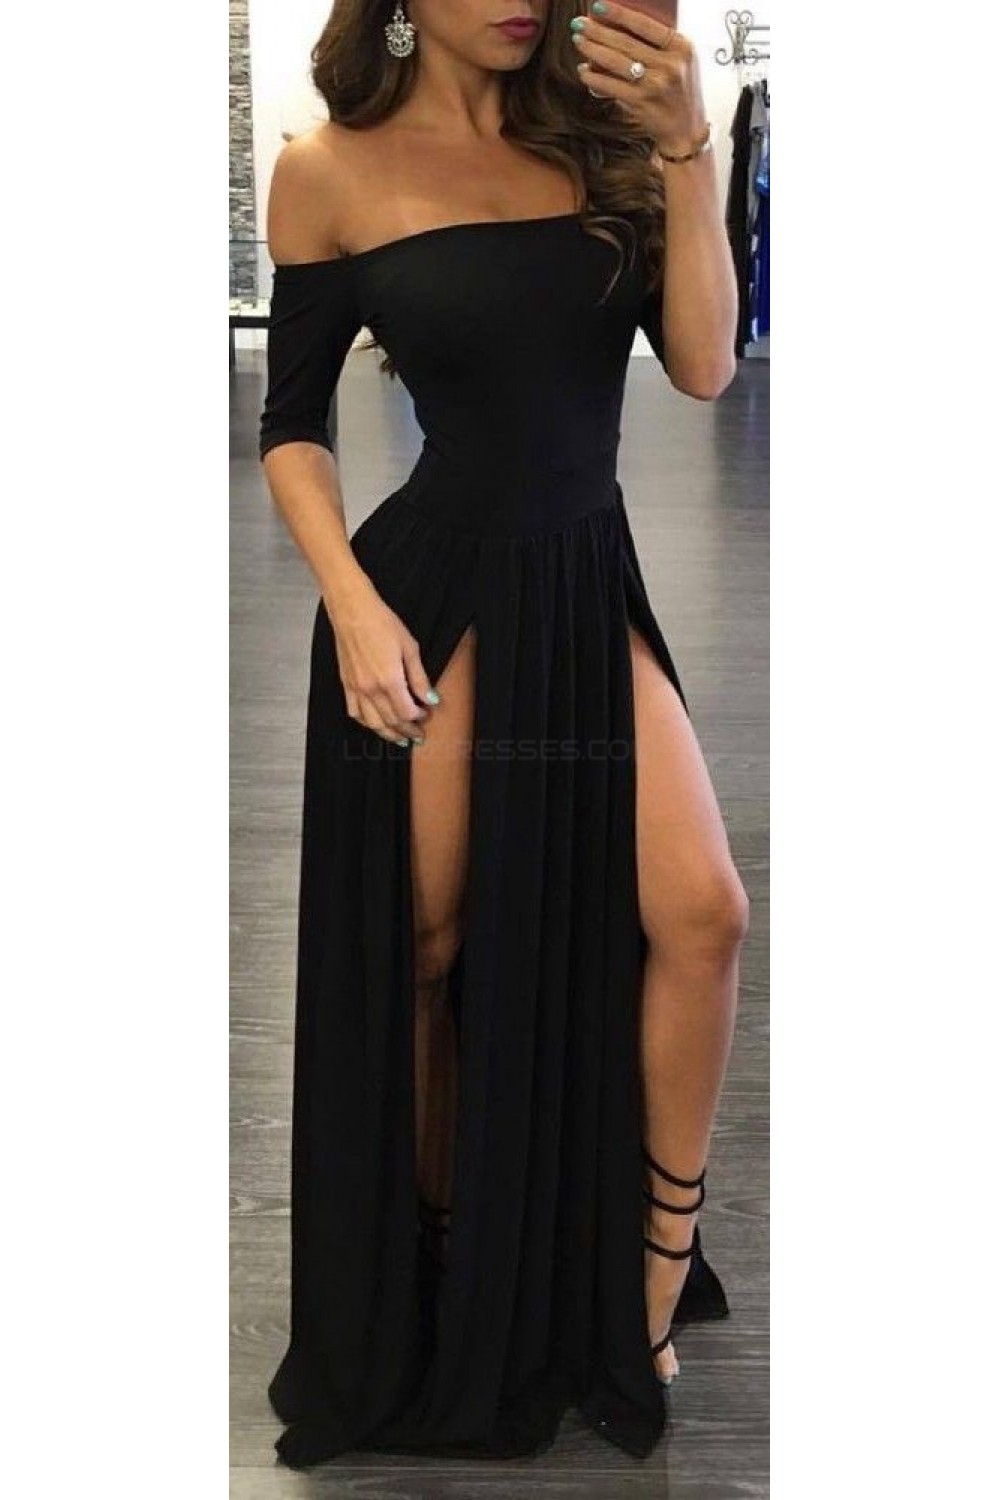 sexiest black dresses